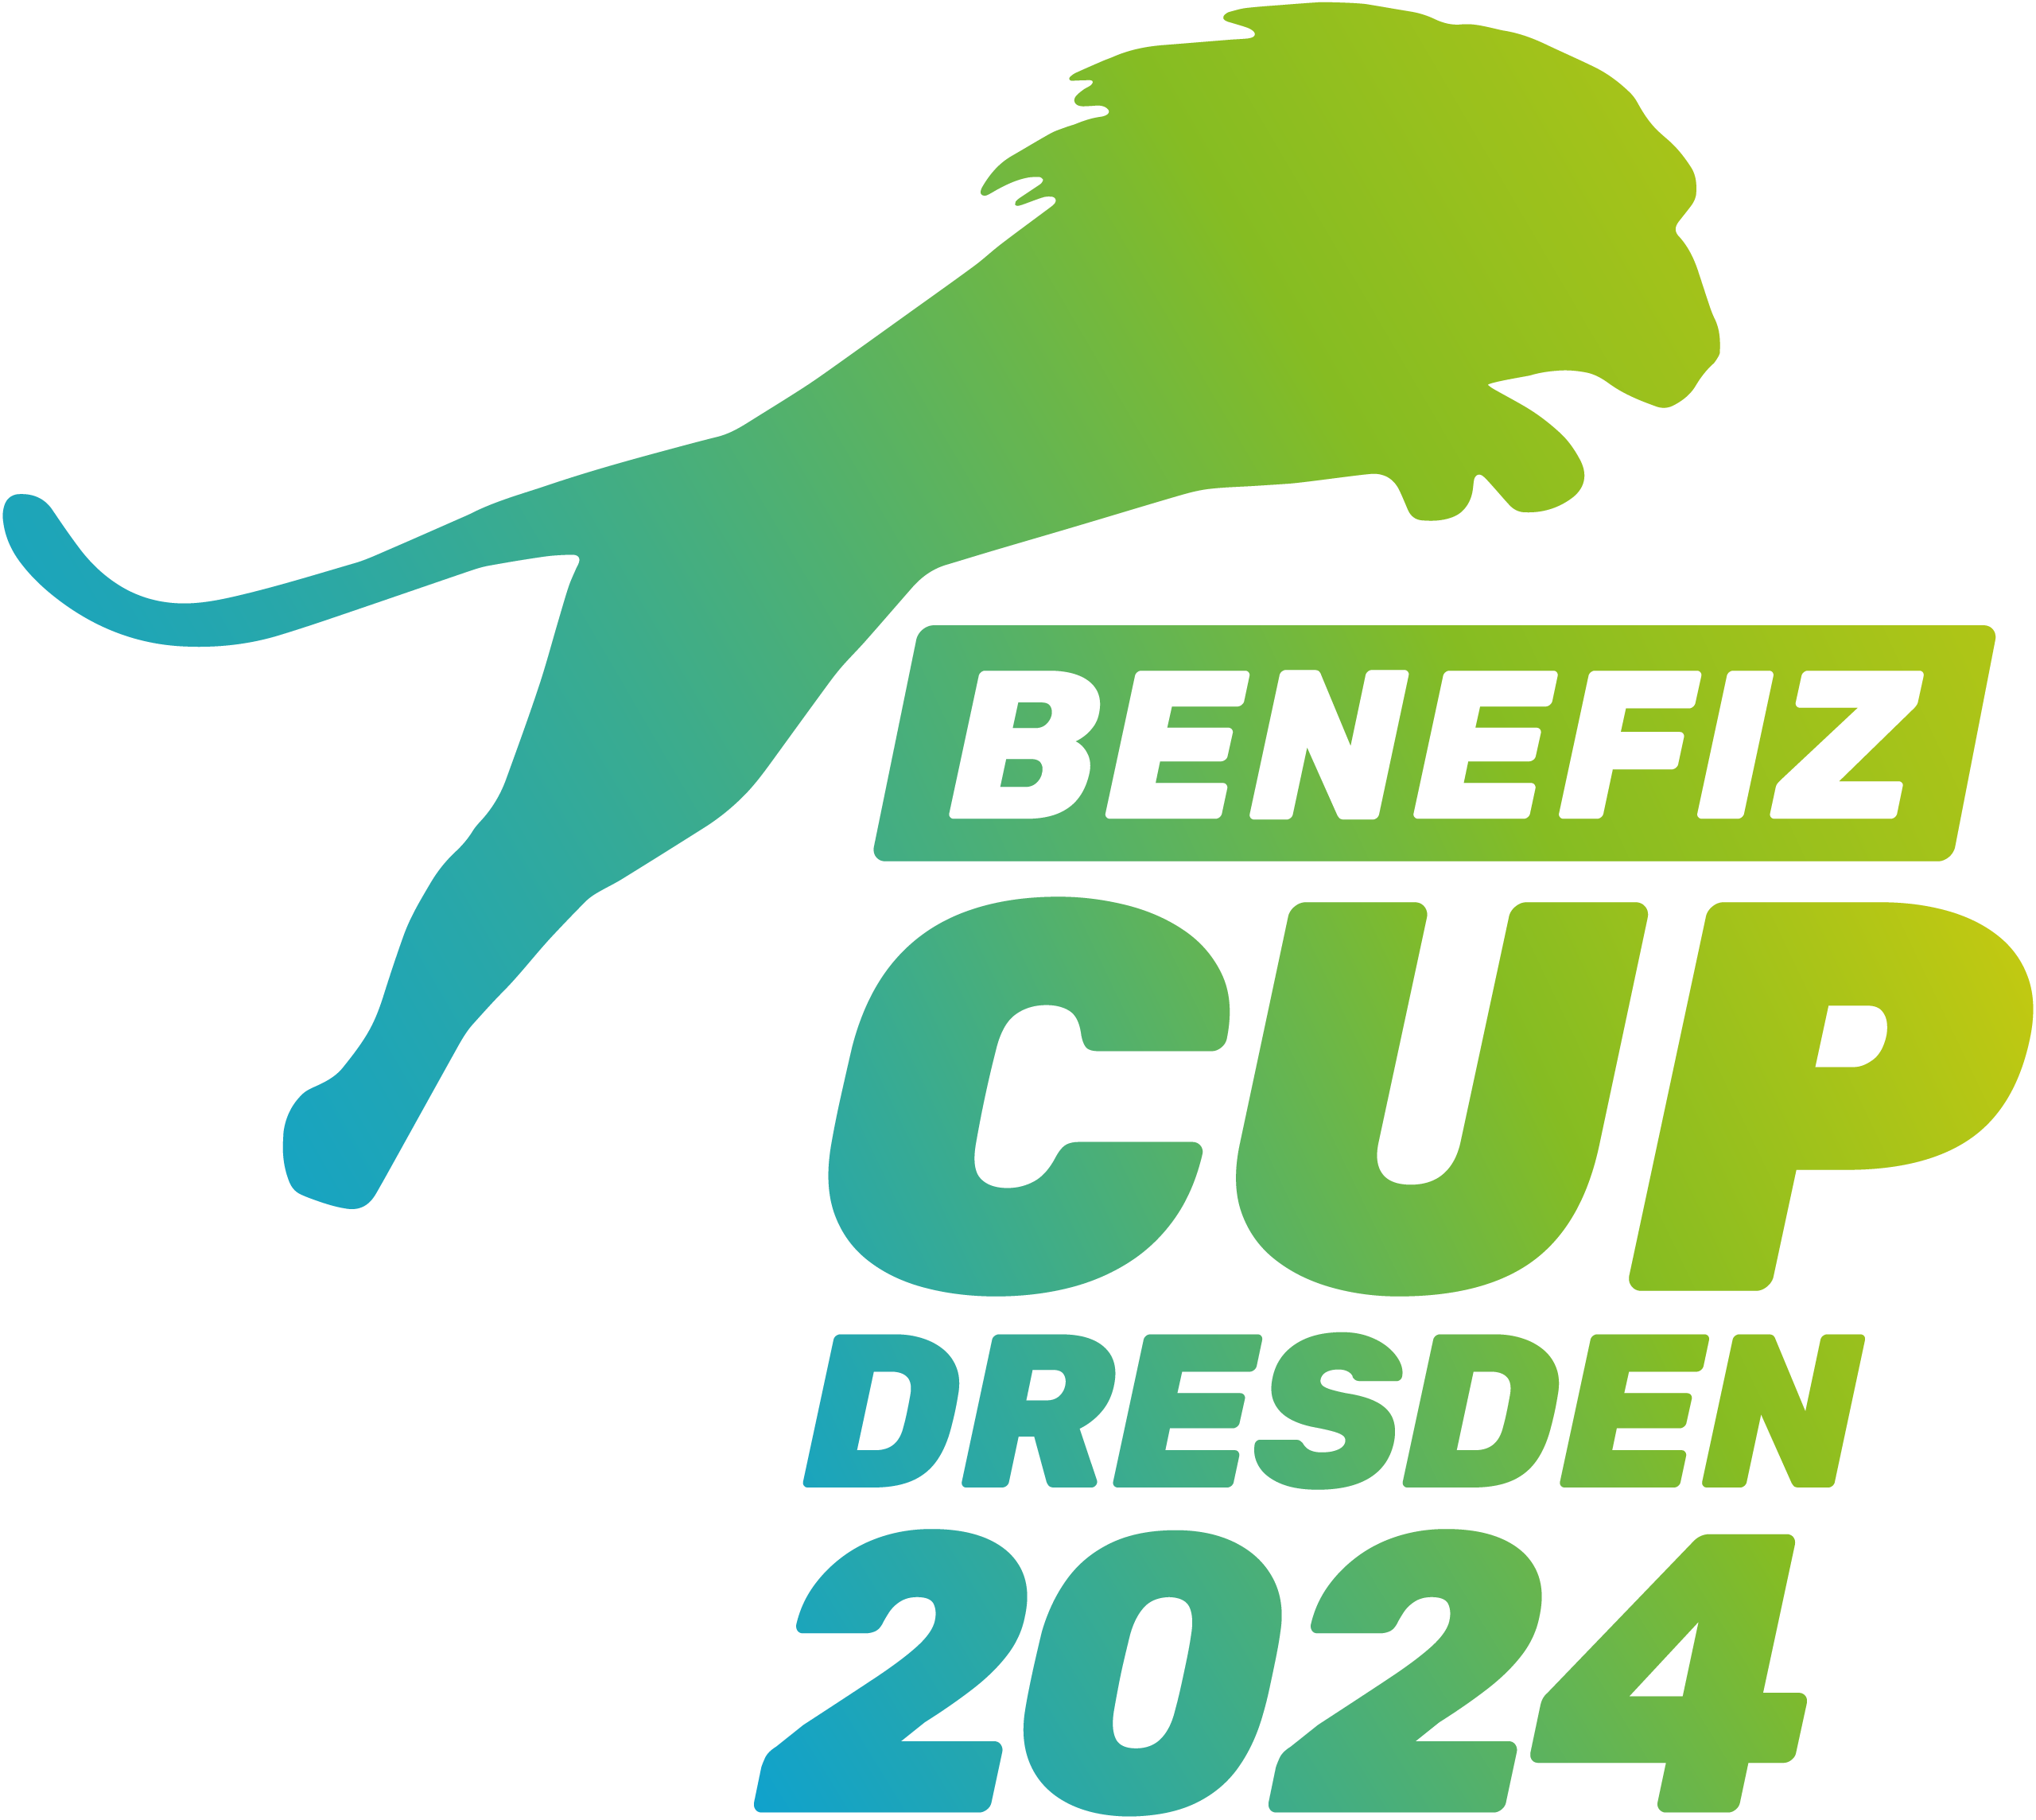 Benefiz Cup Dresden